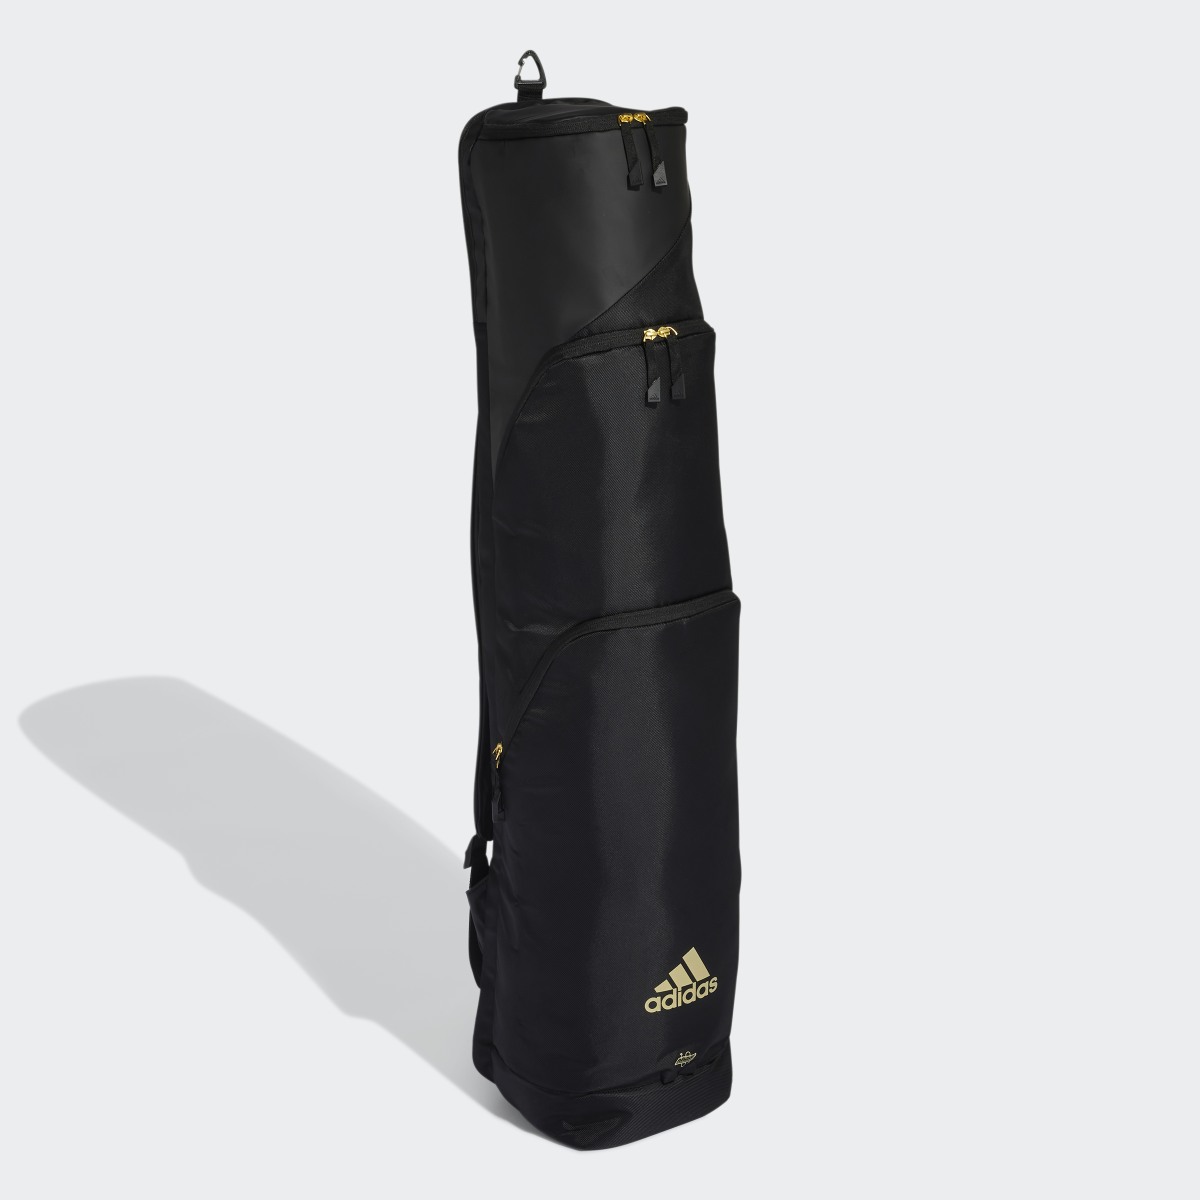 Adidas VS.6 Black/Gold Hockey Stick Bag. 4